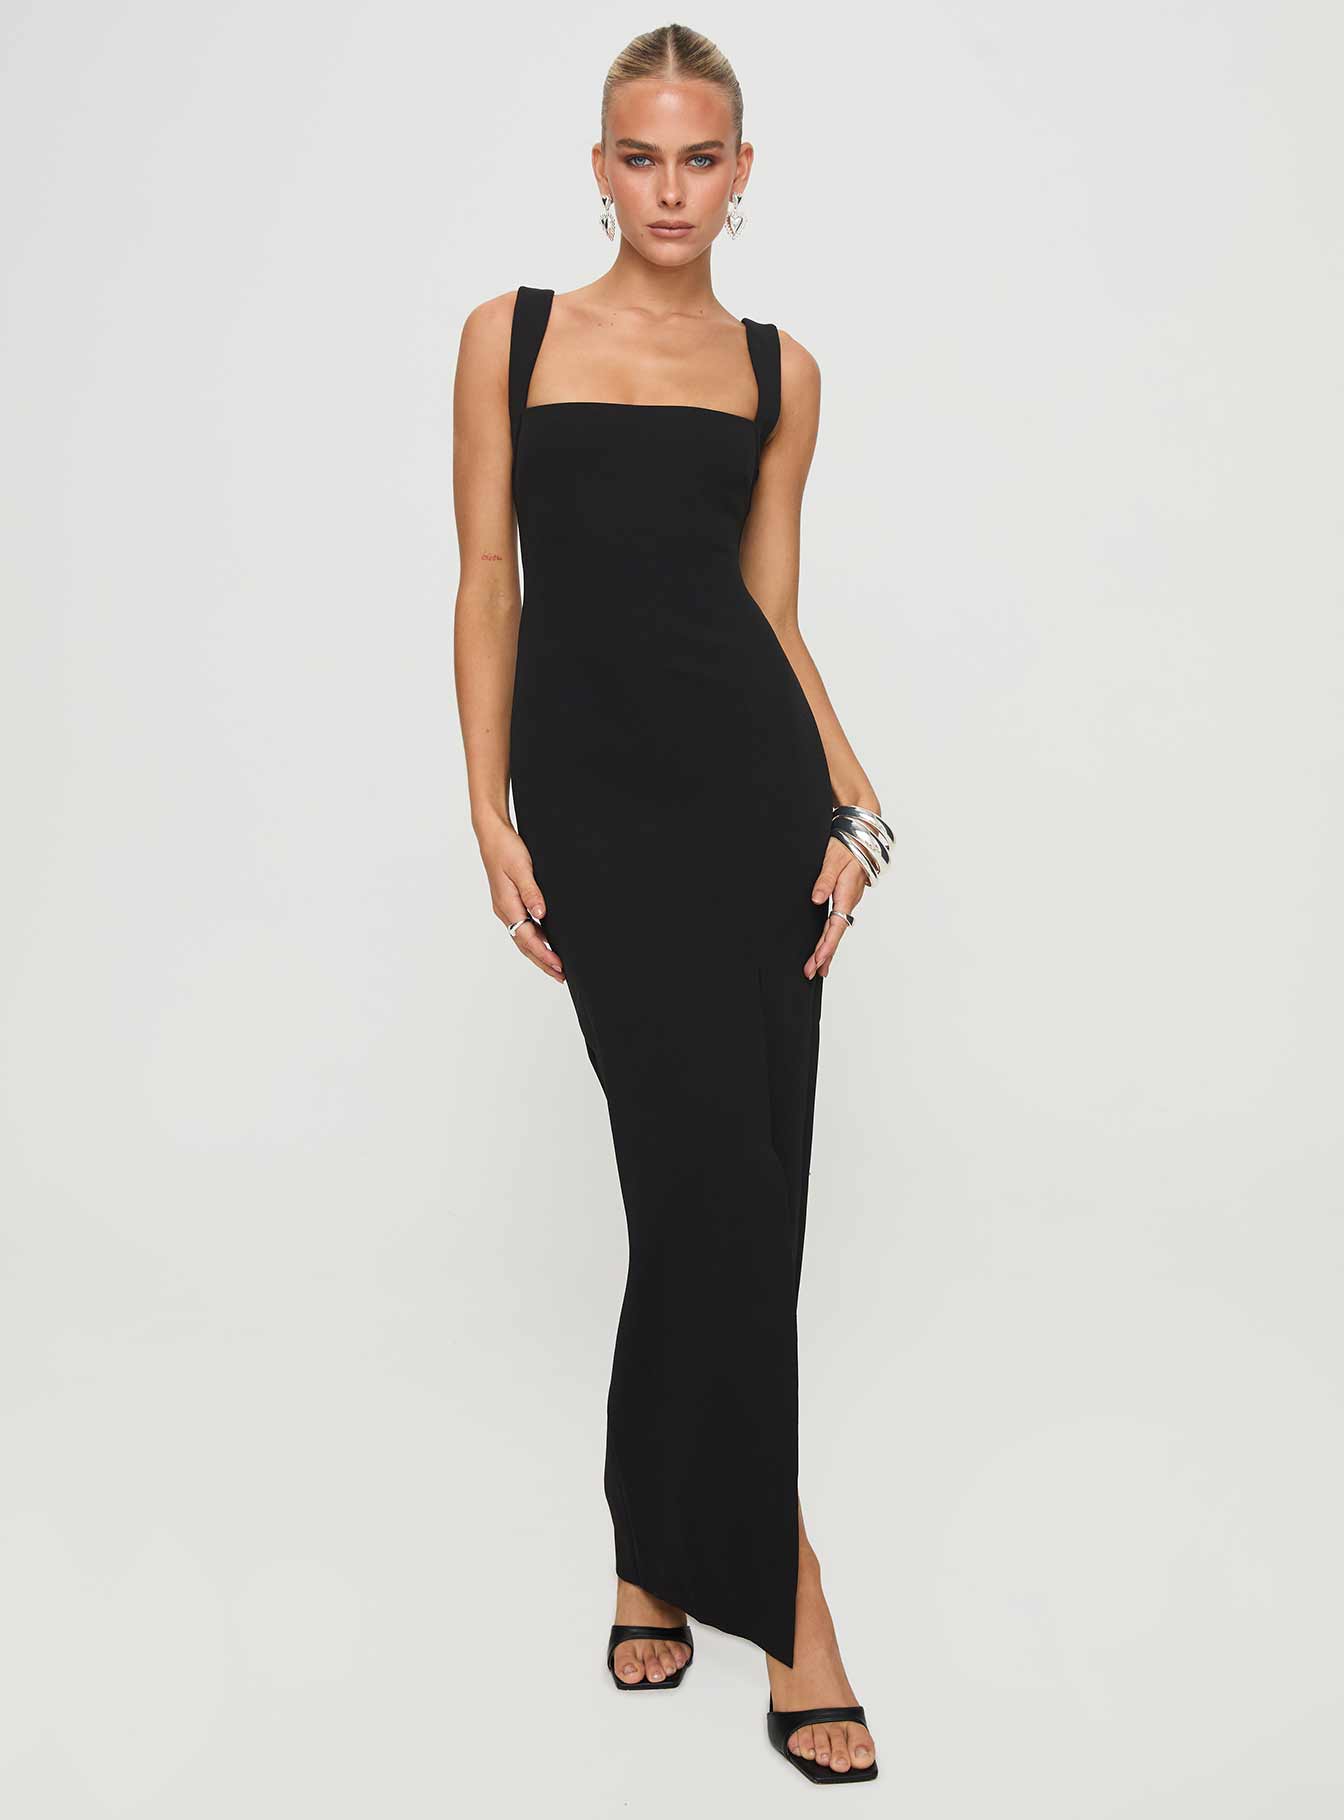 Shop Formal Dress - Bombshell Maxi Dress Black sixth image